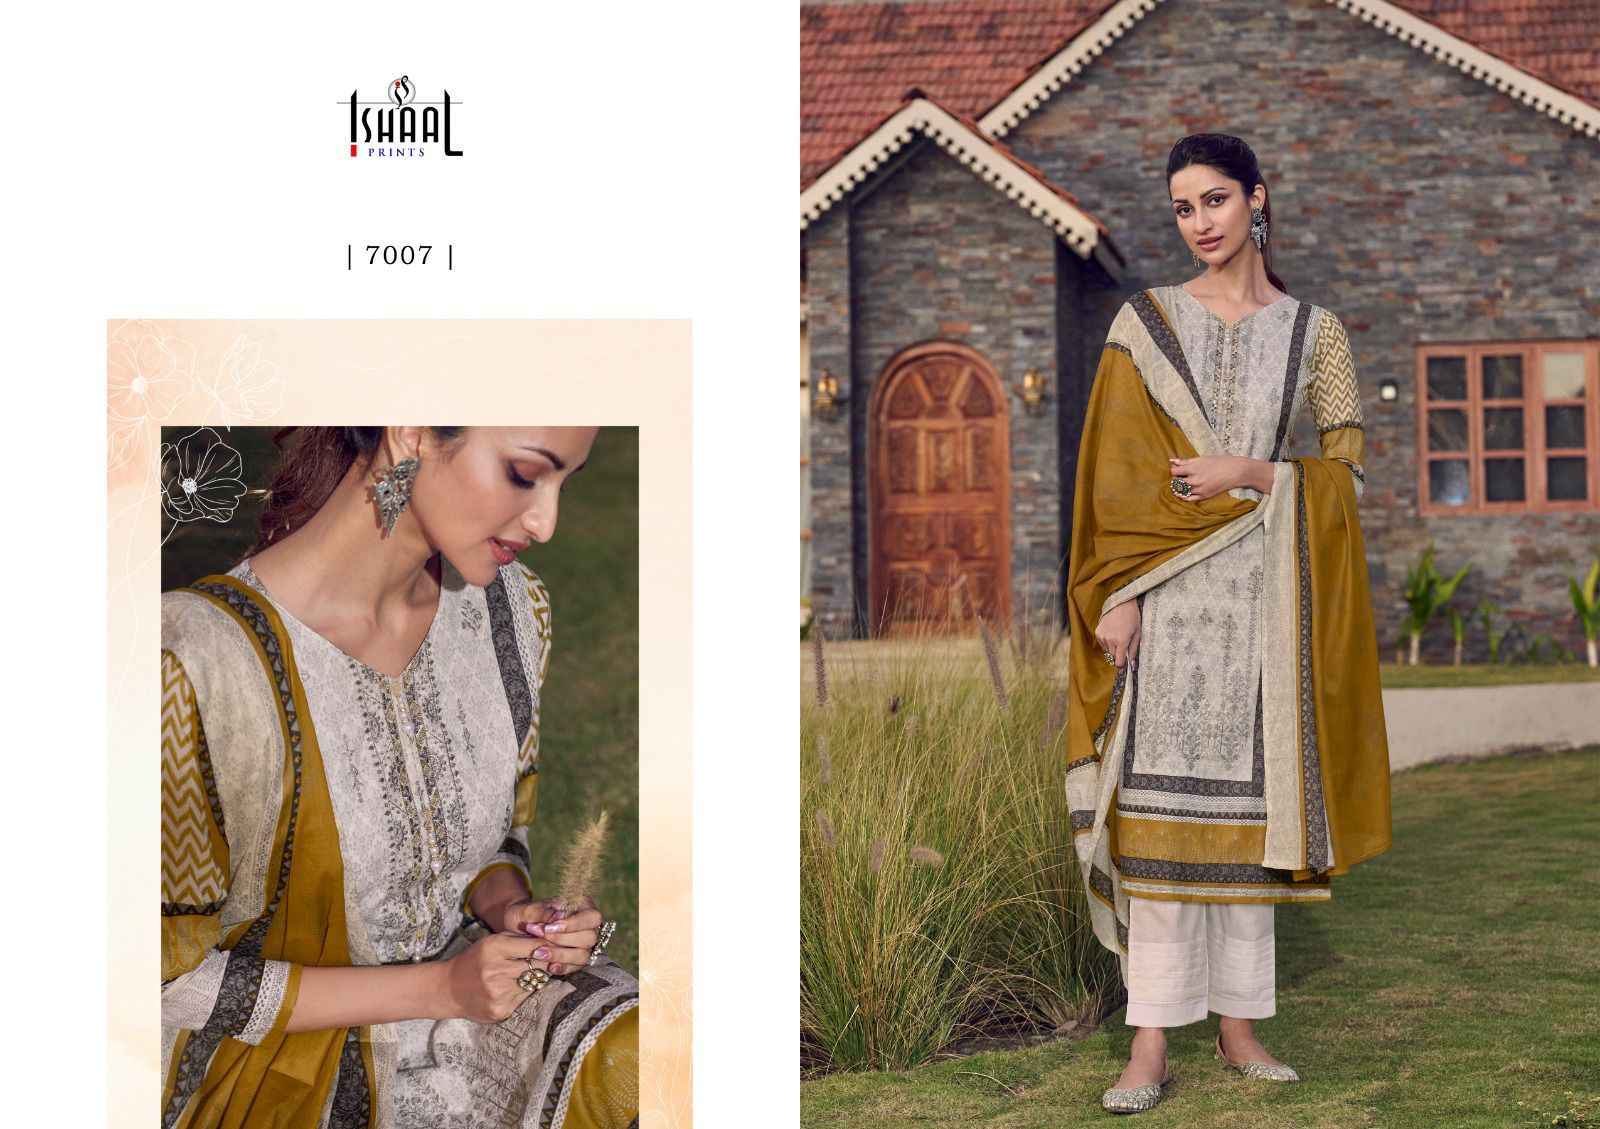 Ishaal Embroidered Vol-7 Lawn Dress Material (10 pcs Catalogue)